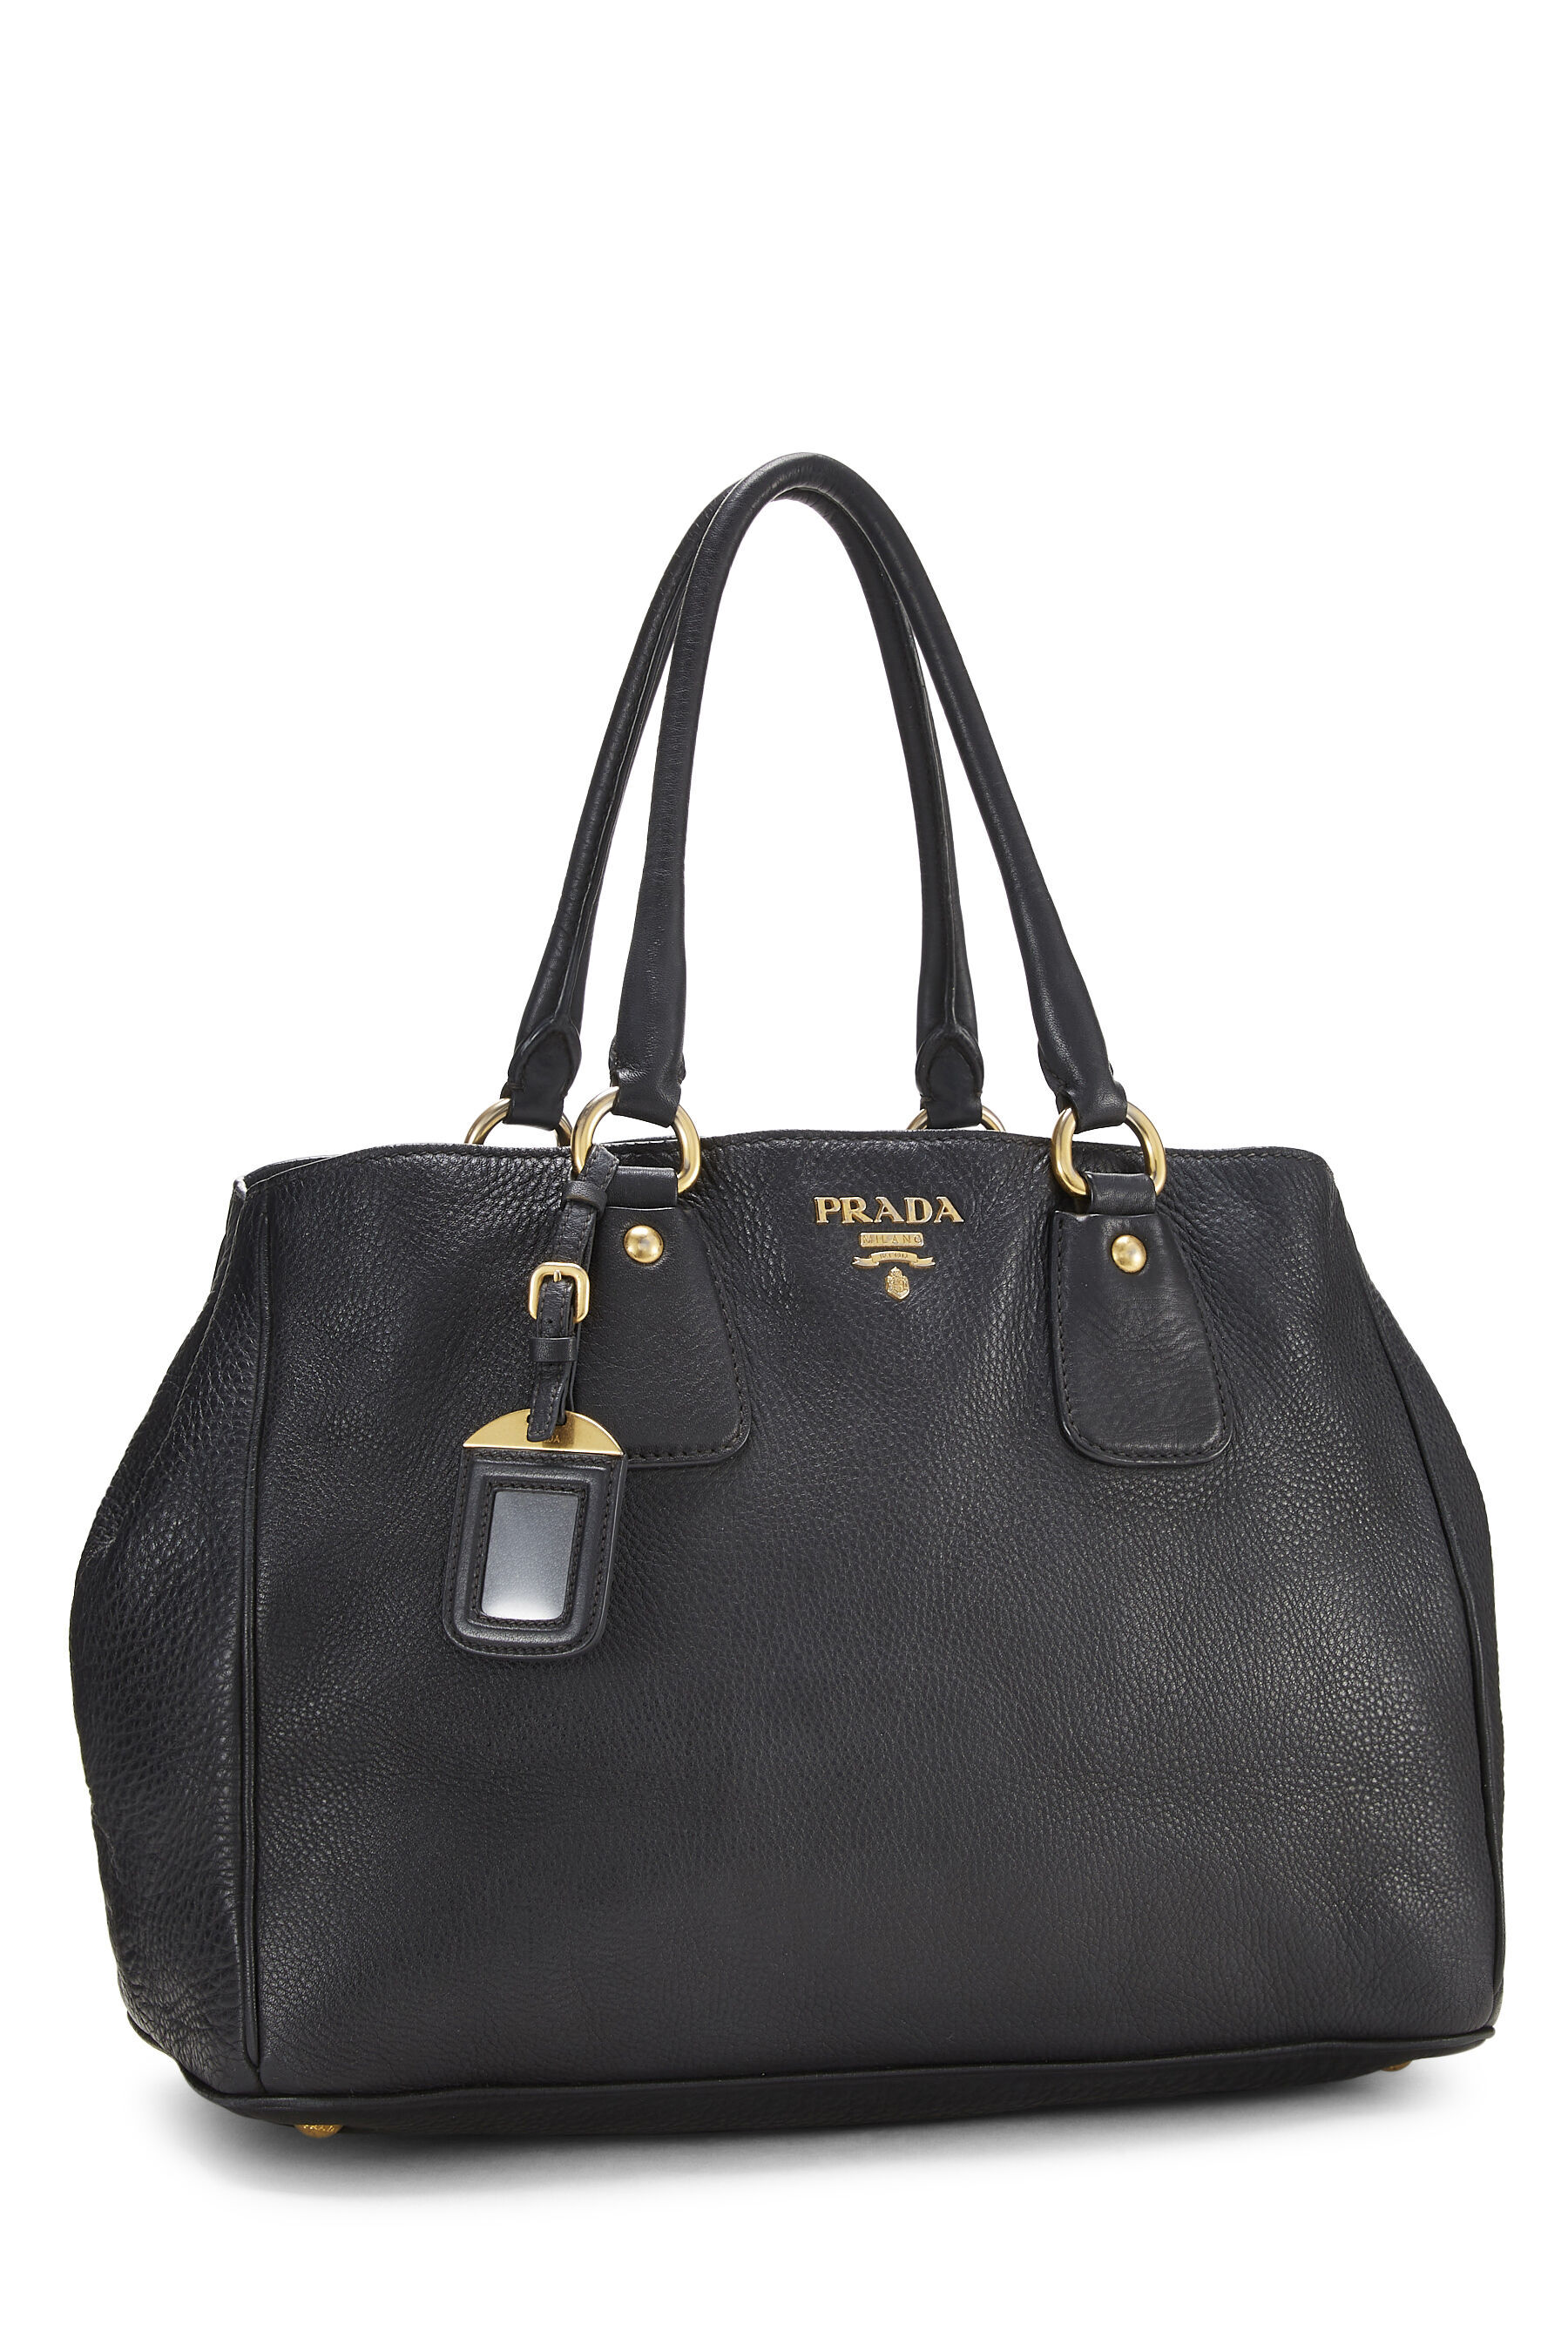 PRADA Black Leather Tessuto Hydra Shoulder Bag Item#14939 – ALL YOUR BLISS